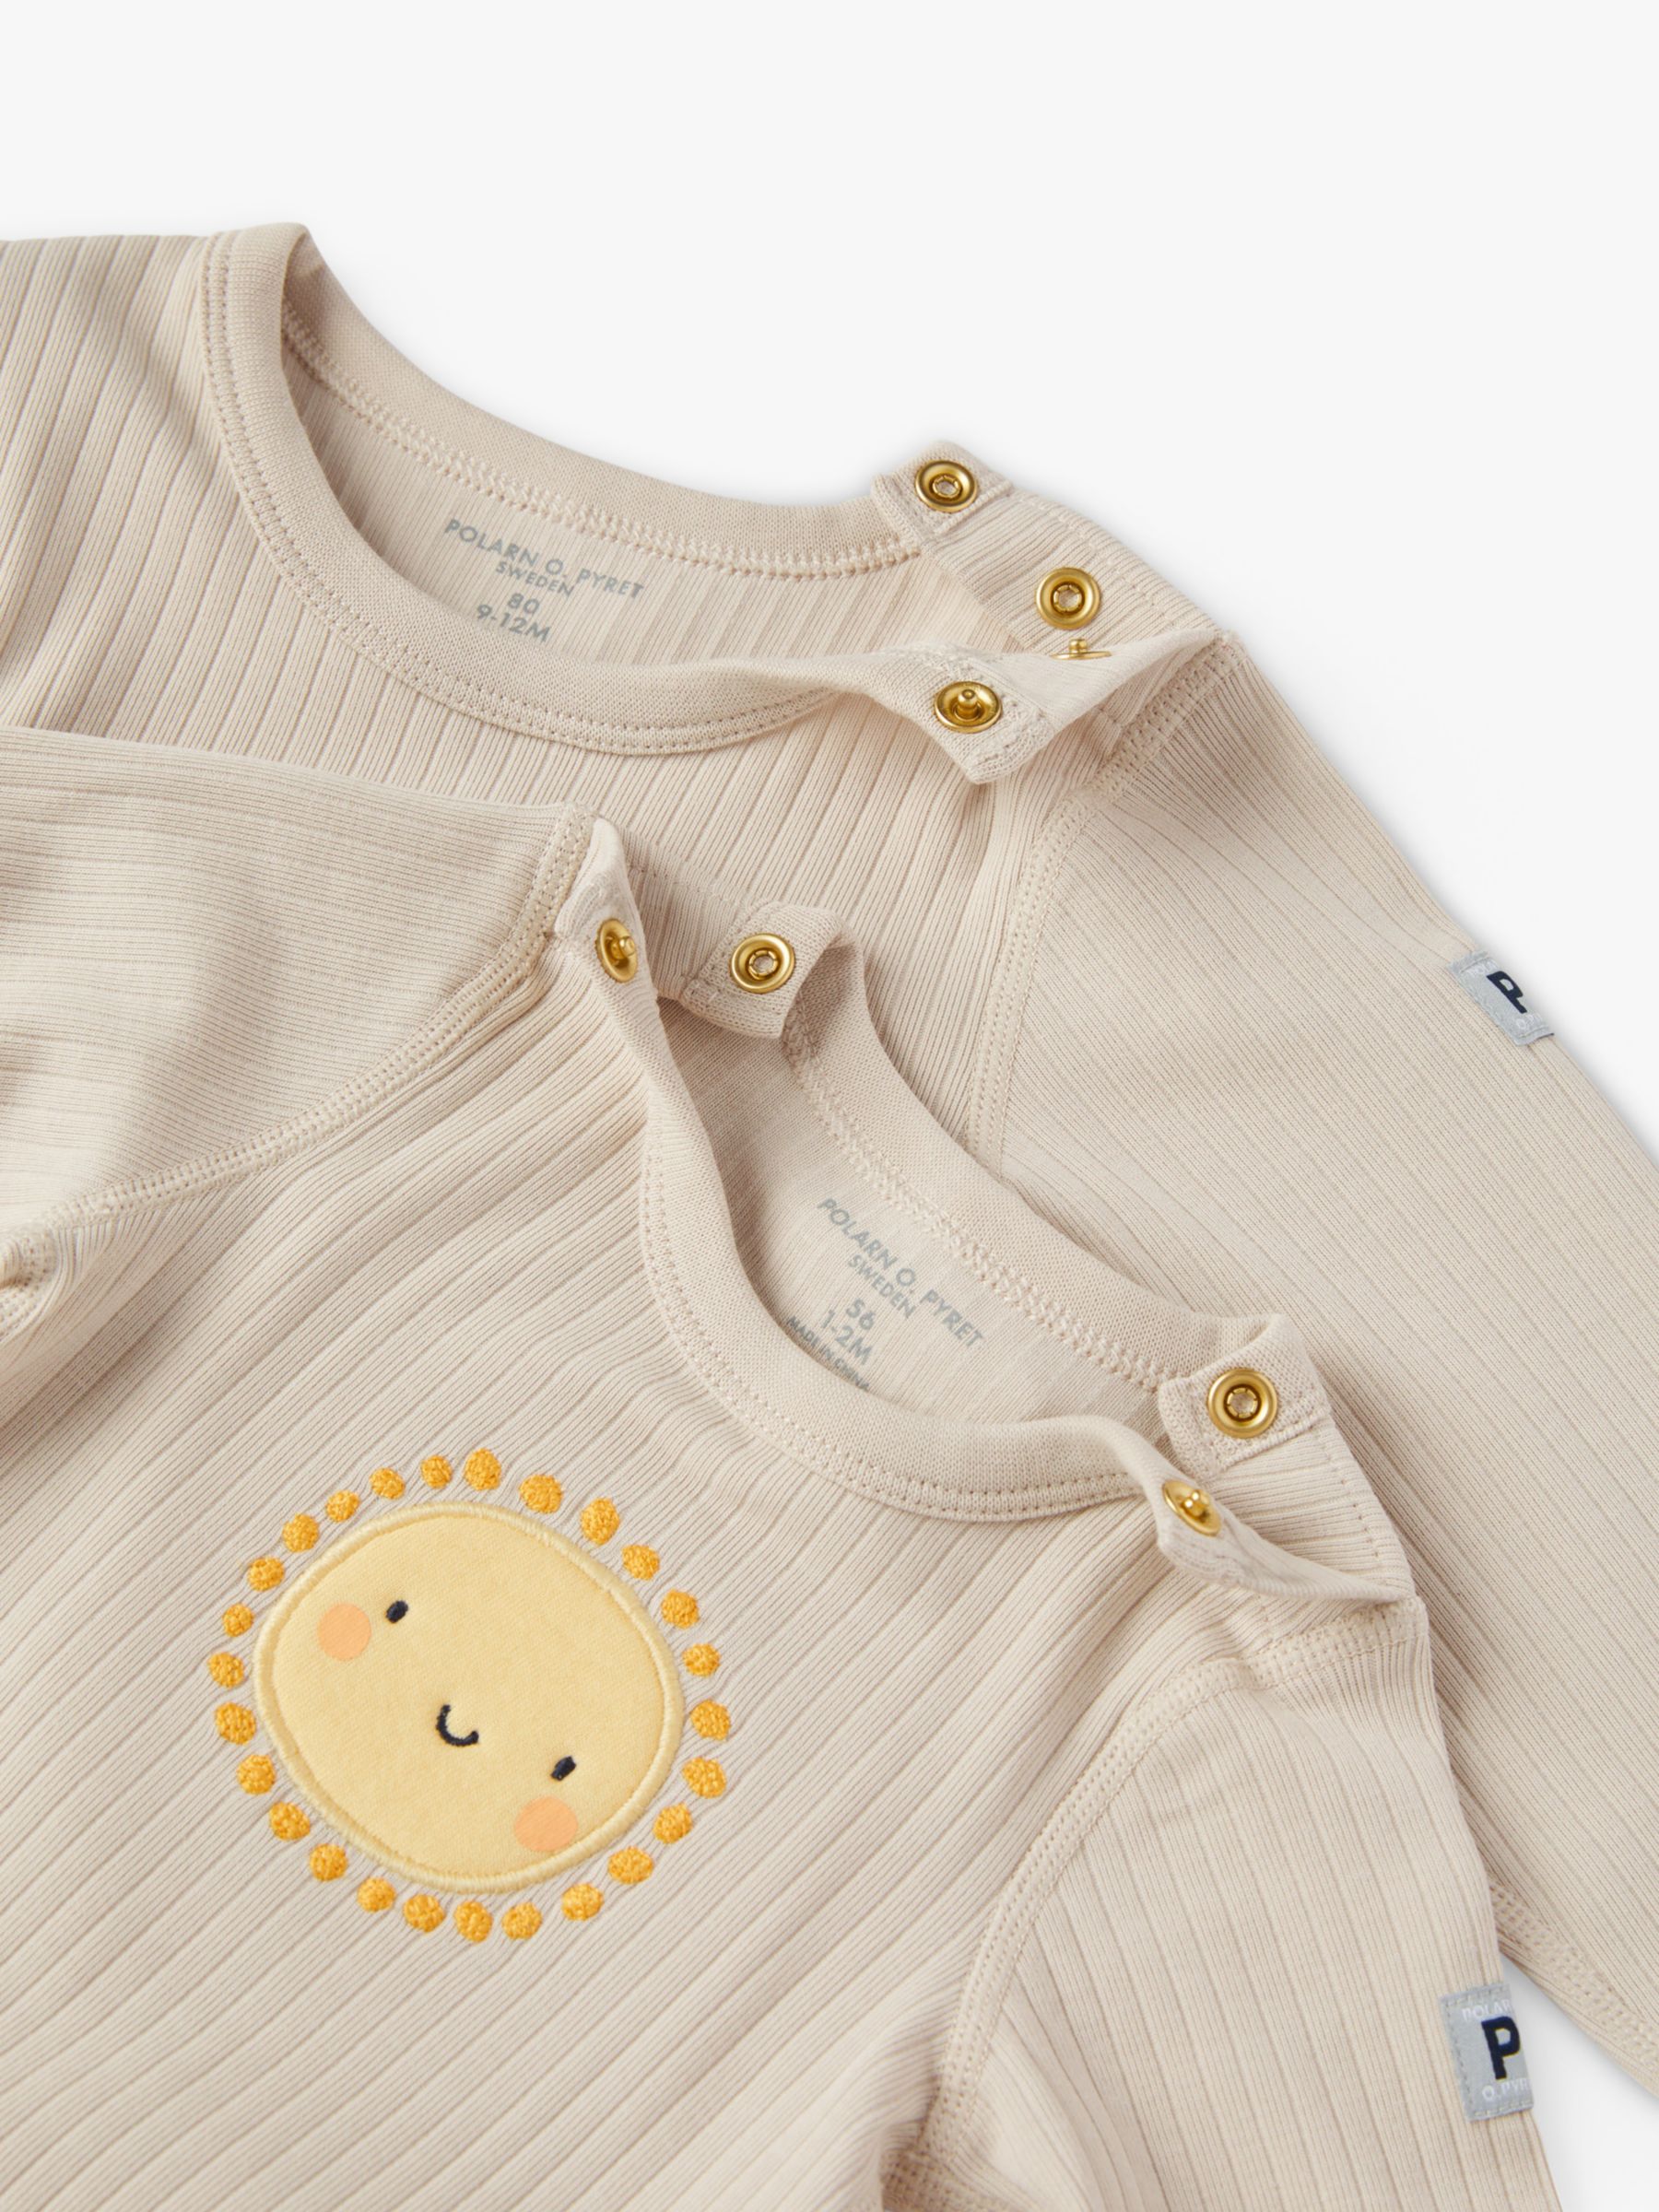 Buy Polarn O. Pyret Baby Organic Cotton Rib Sun Applique Bodysuit, Natural Online at johnlewis.com